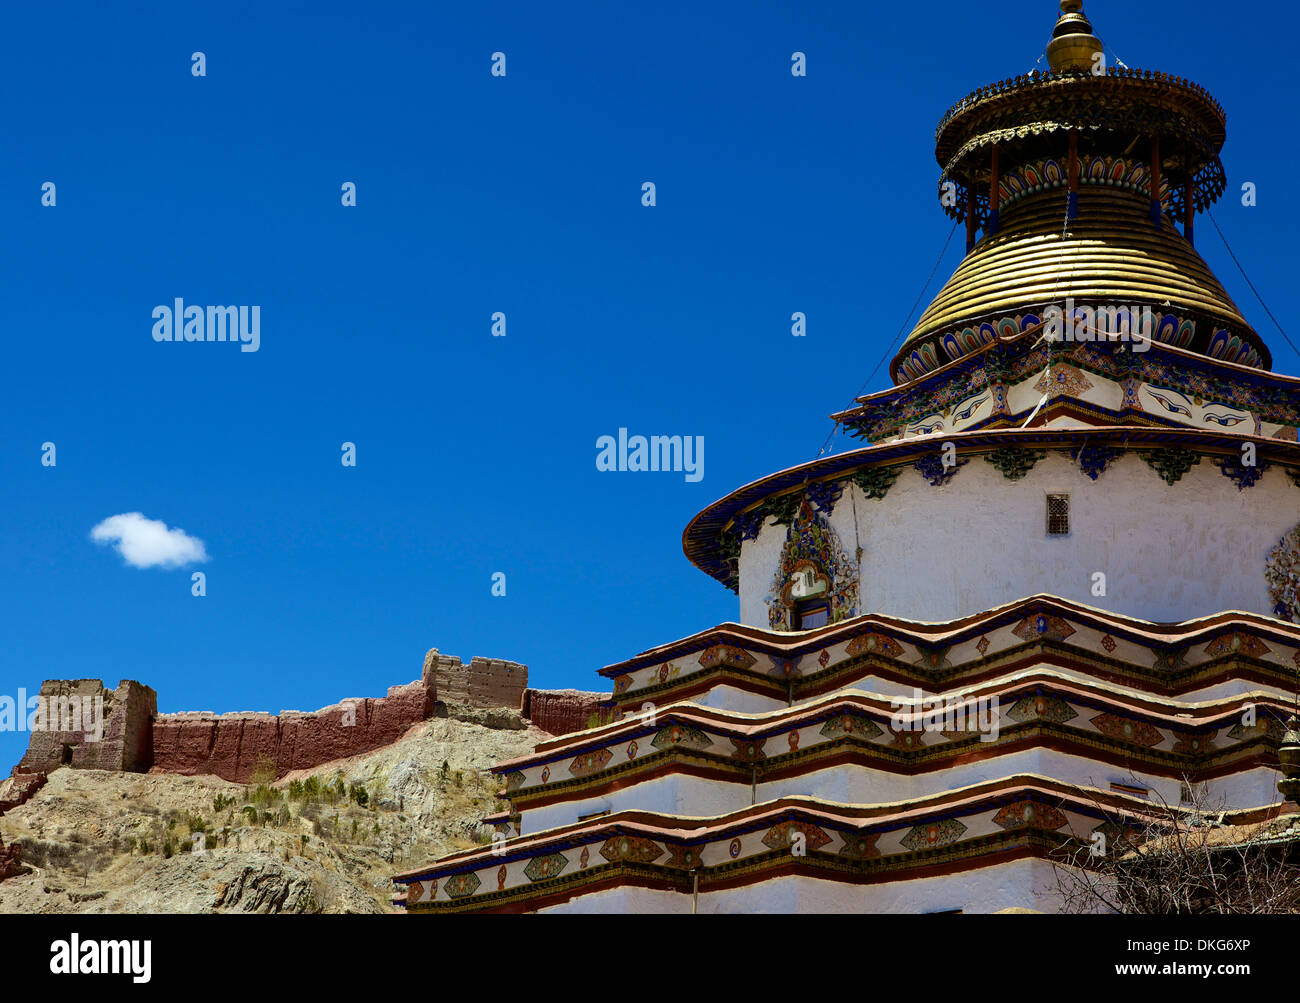 La Stupa (chorten Kumbum) en el monasterio de Palcho Gyantse, Tíbet, China, Asia Foto de stock